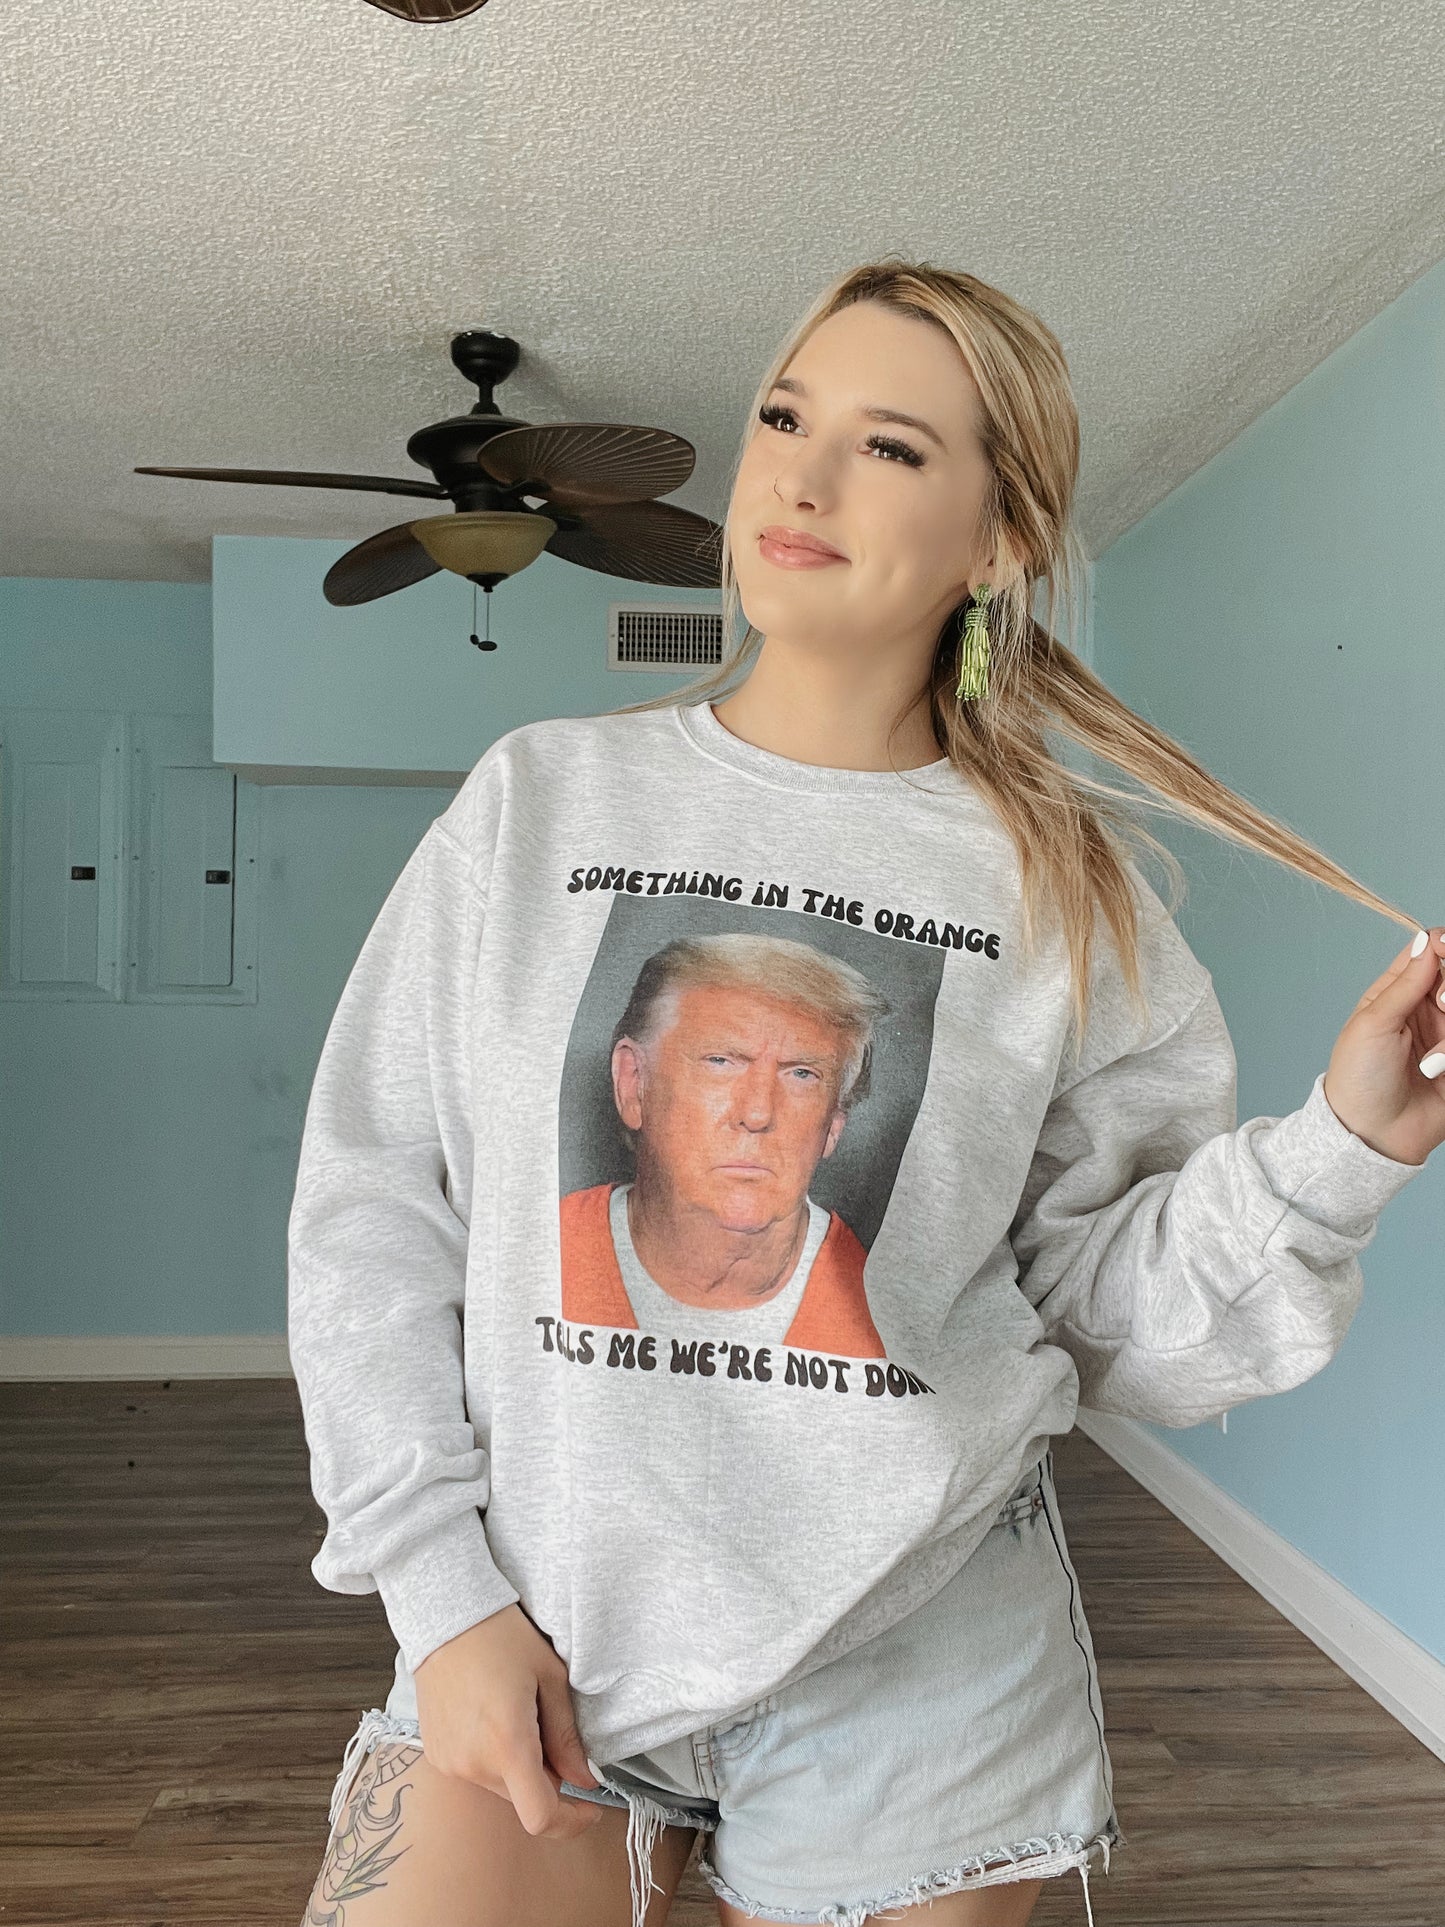 Something in the orange tells me we’re not done | Trump Mugshot Sweatshirt